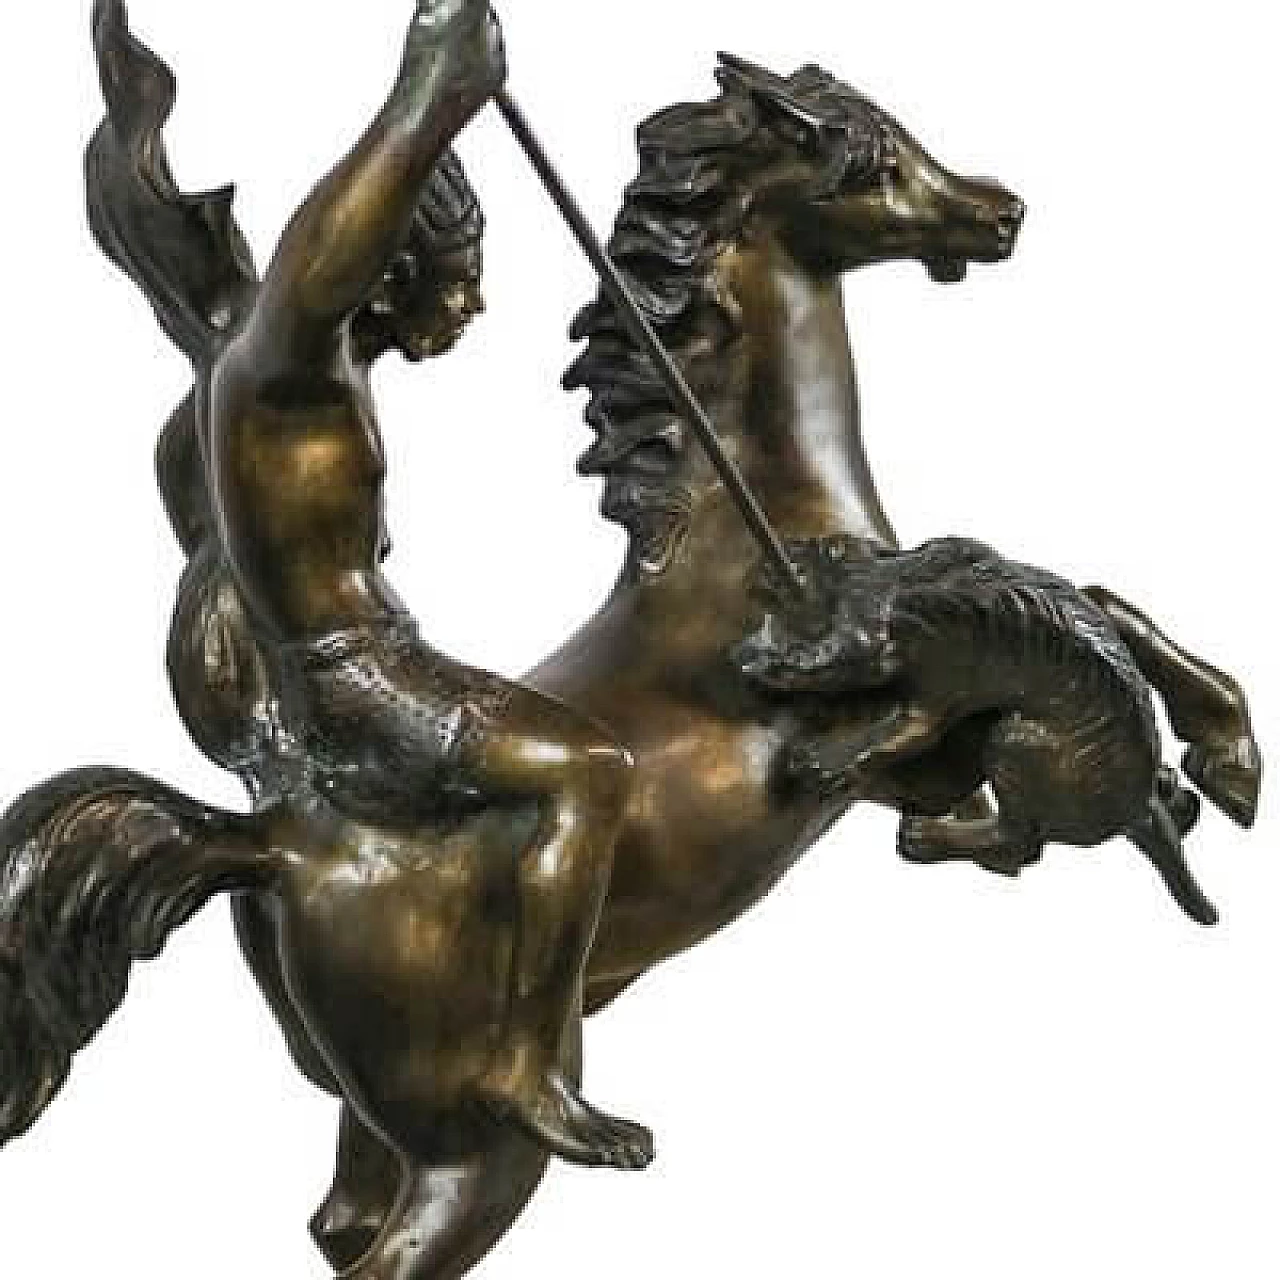 Indian warrior on horseback, reproduction after Tommaso Campajola, bronze sculpture 8